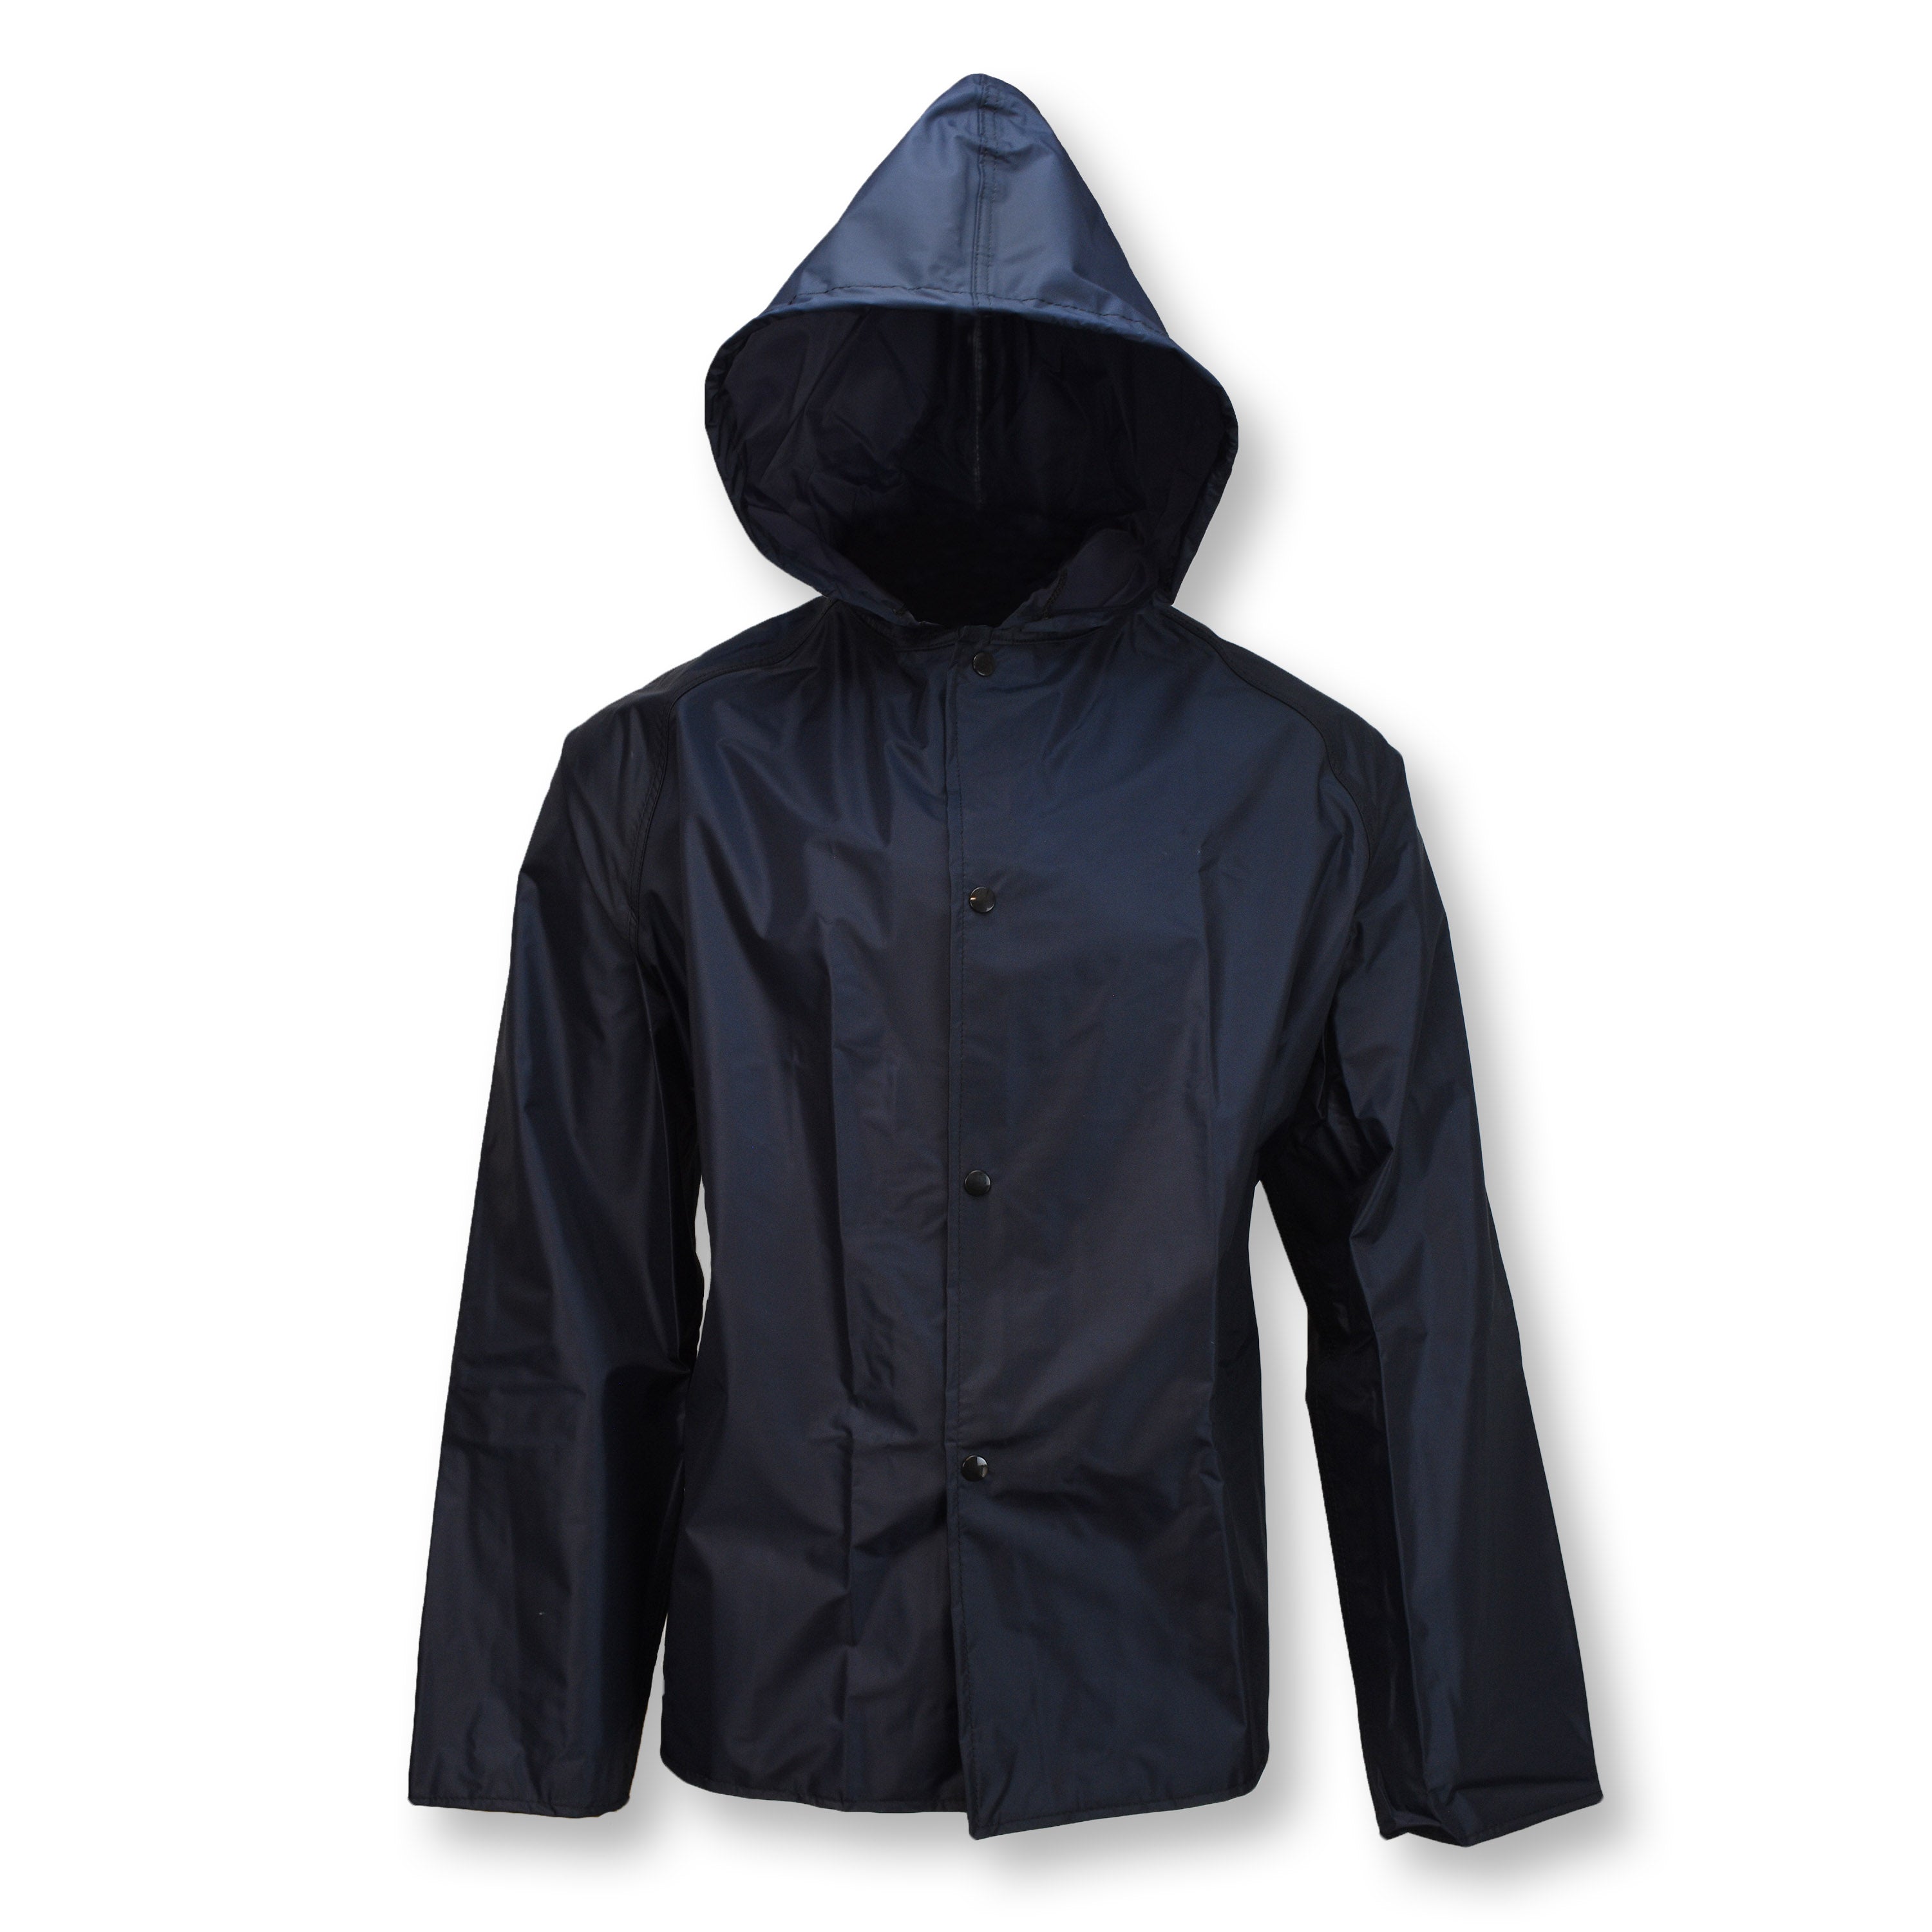 Nylon Rain Jacket With Attached Hood